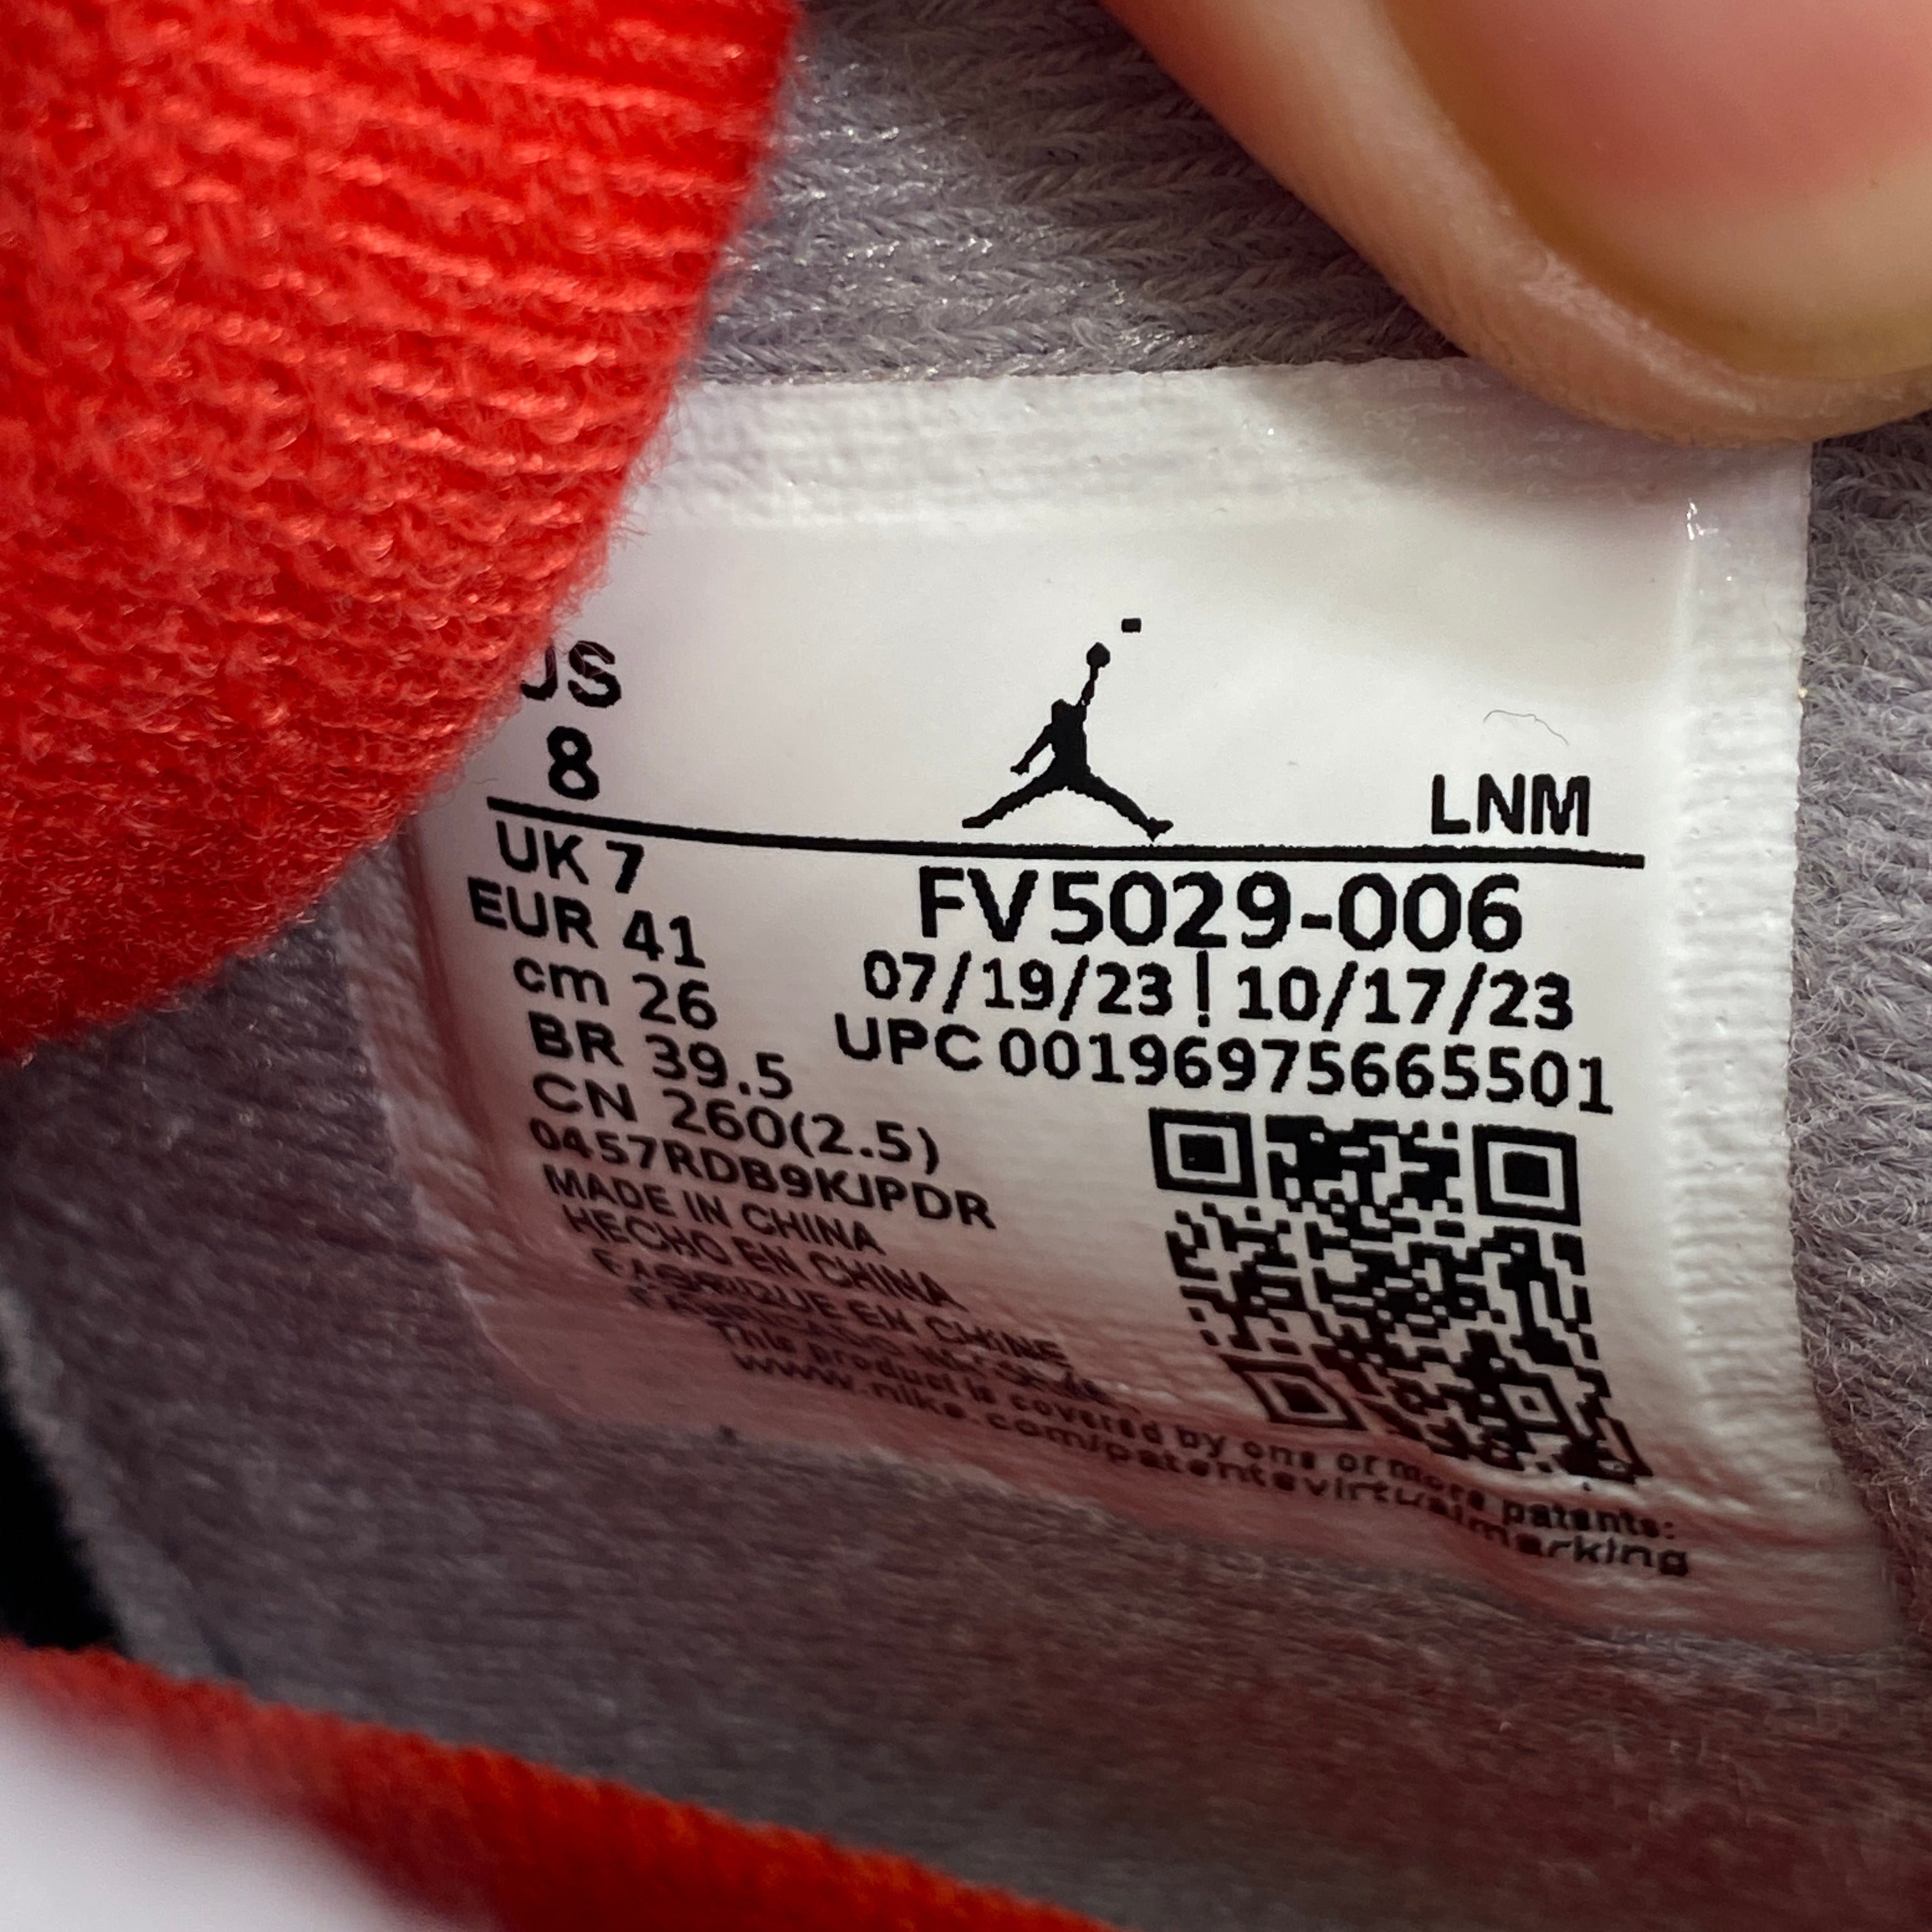 zapatillas de running Nike hombre talla 44 baratas menos de 60